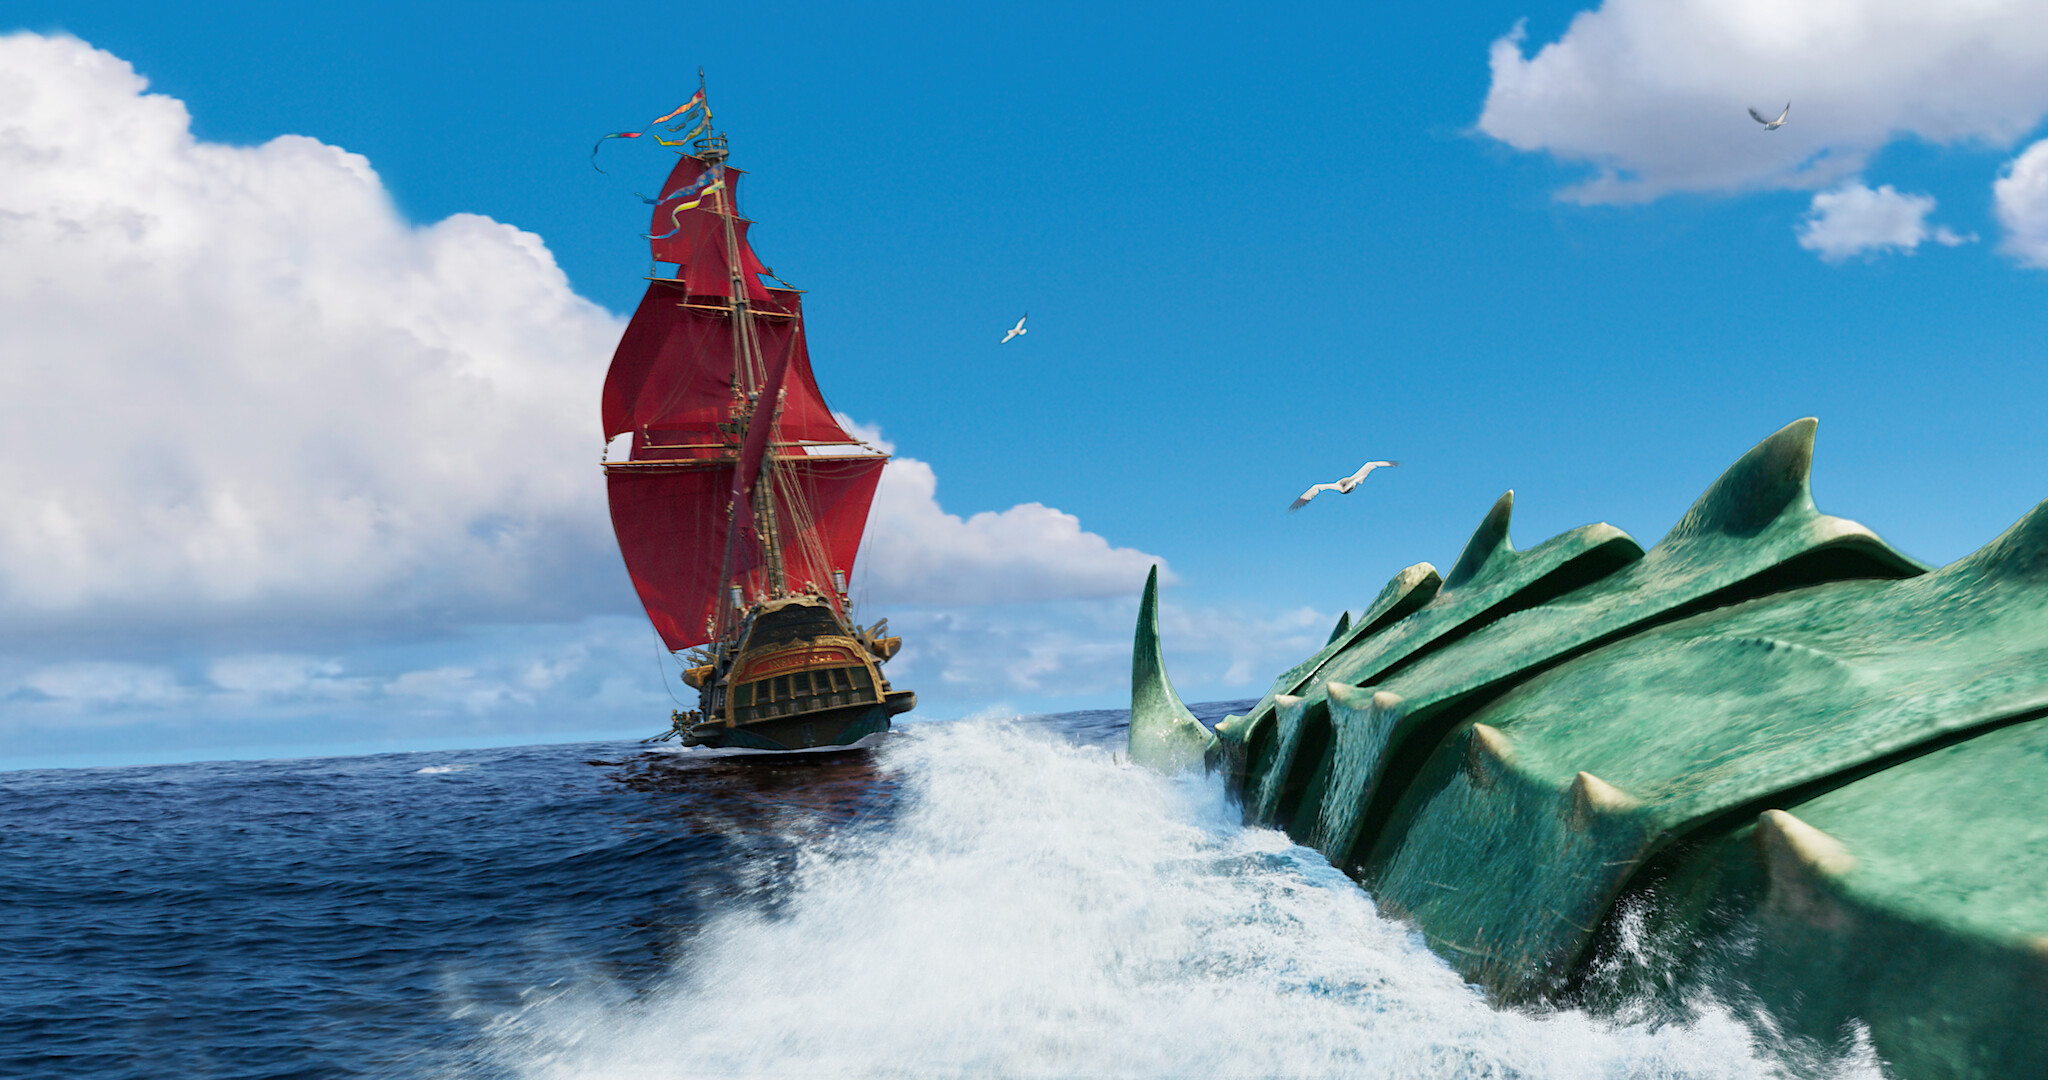 Sea of Thieves Season Seven deep dive video reveals ship prices